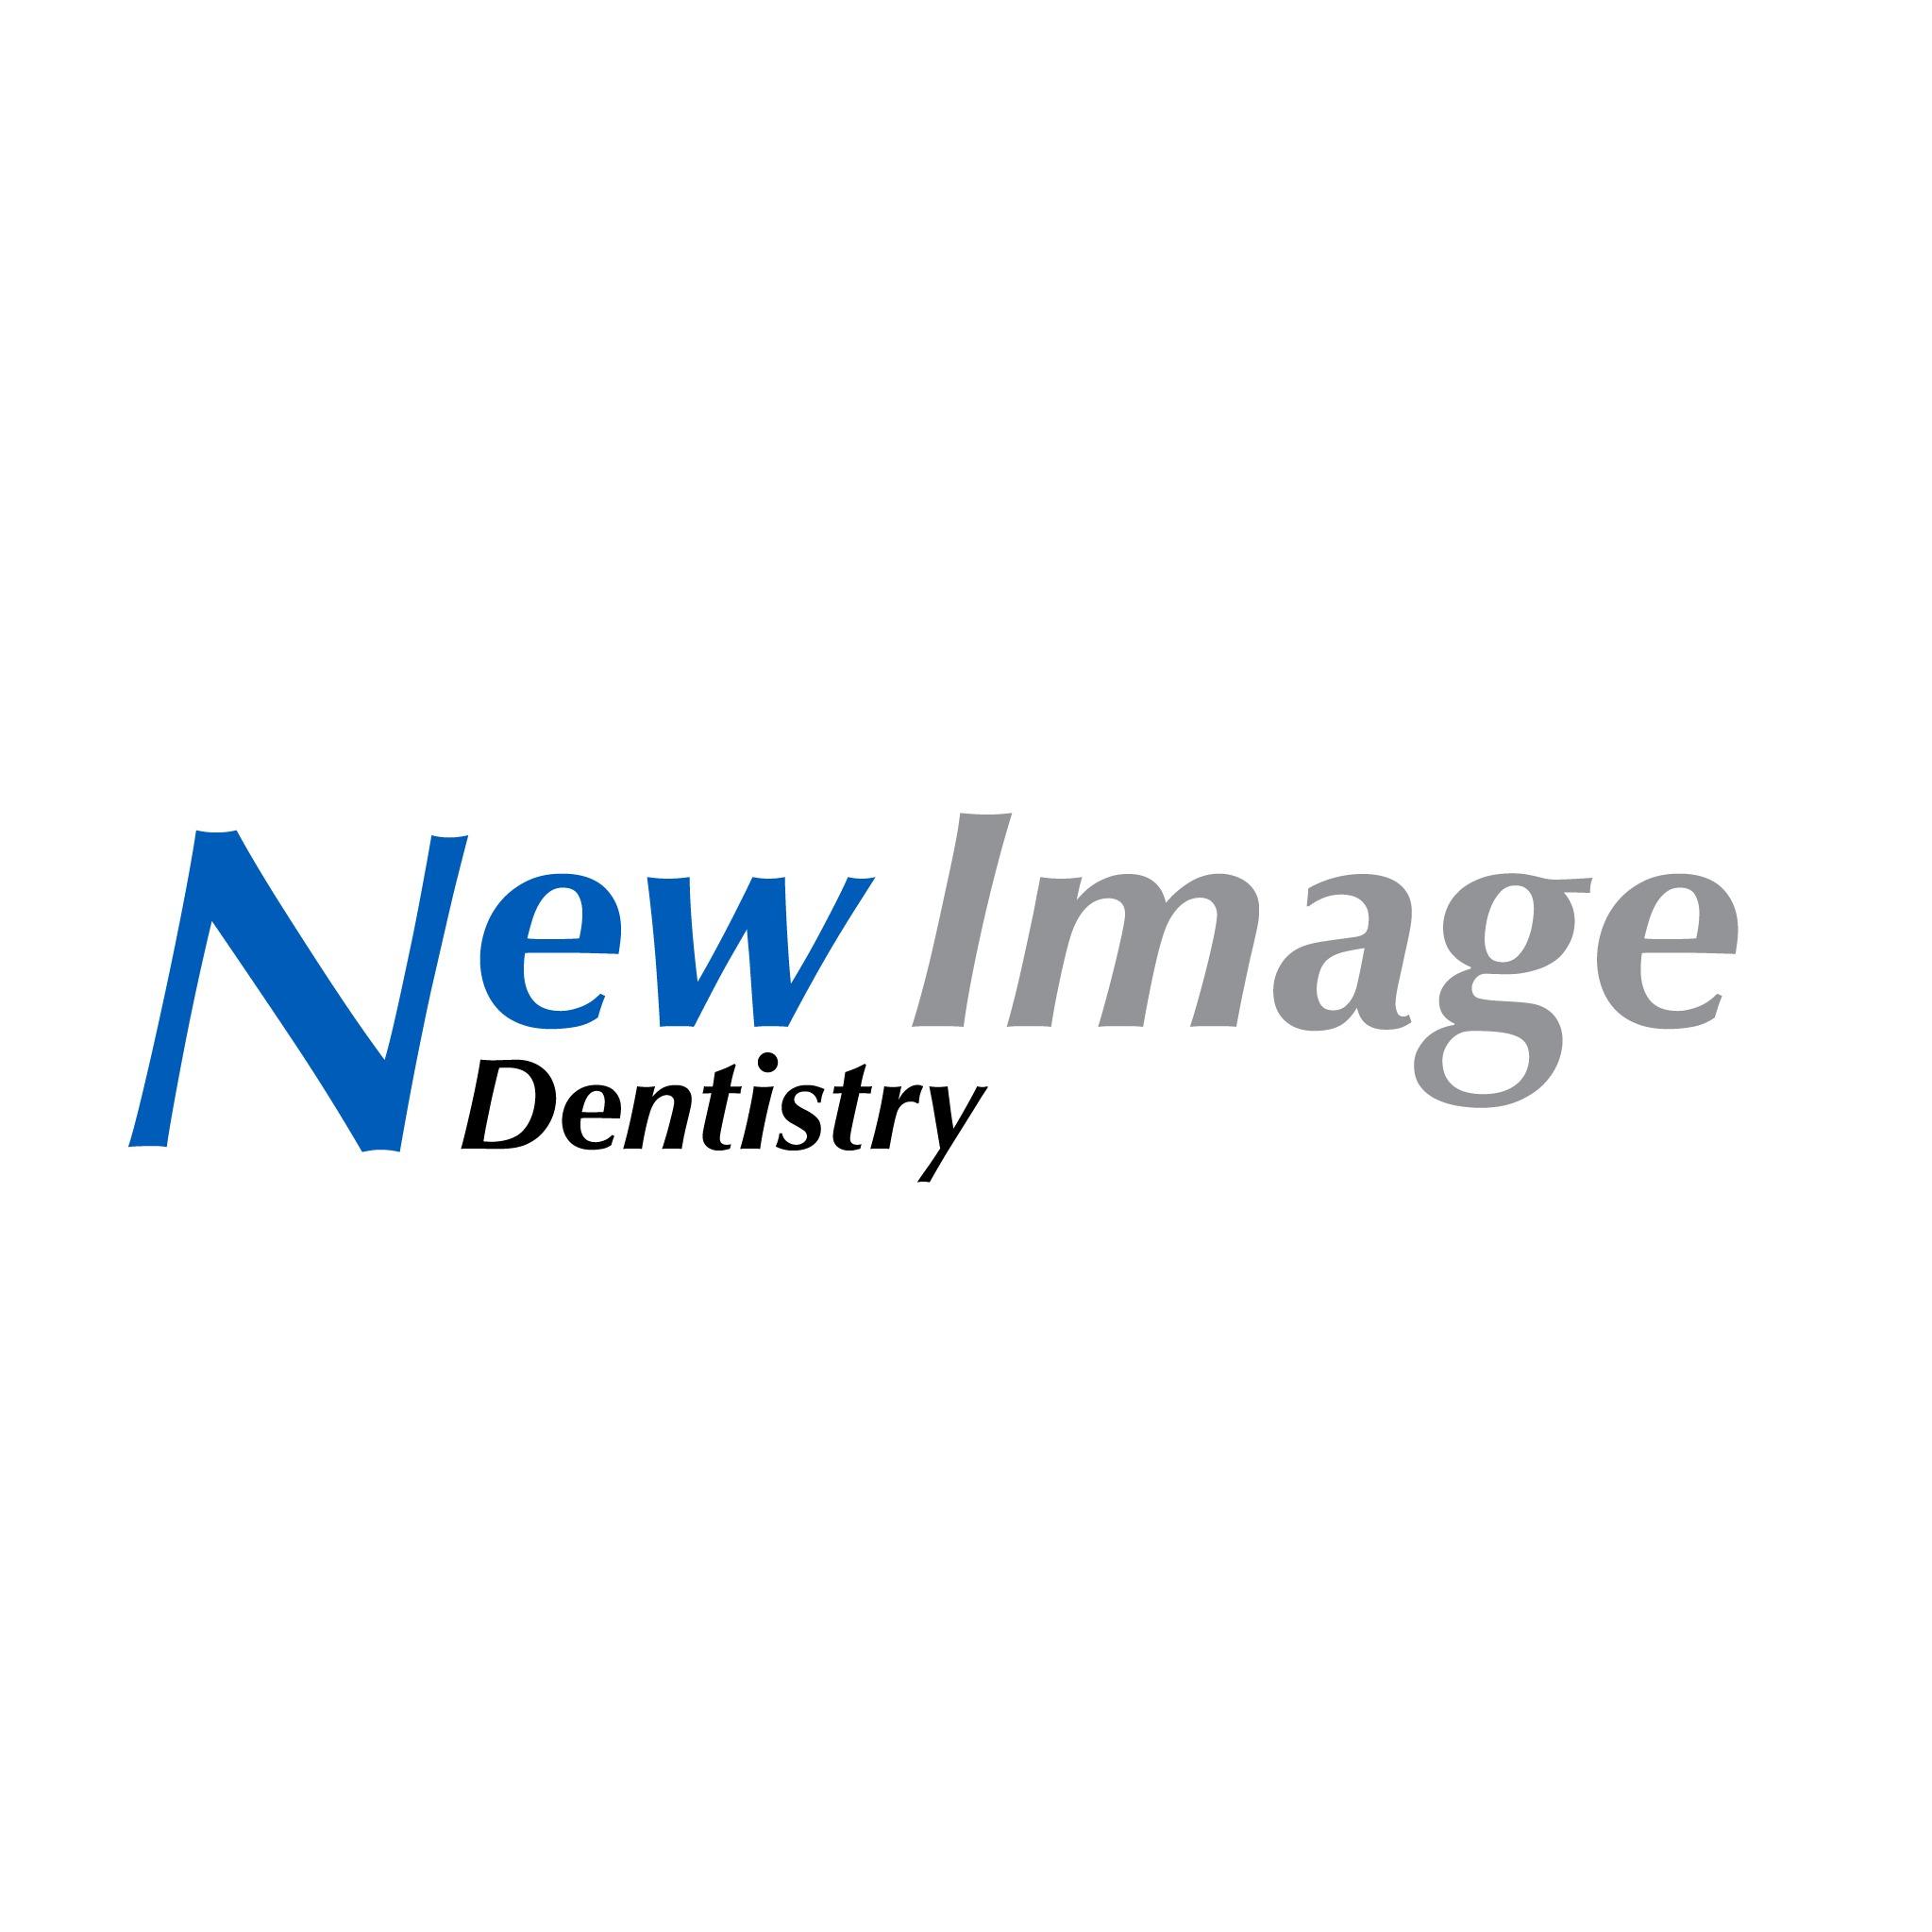 New Image Dentistry Photo